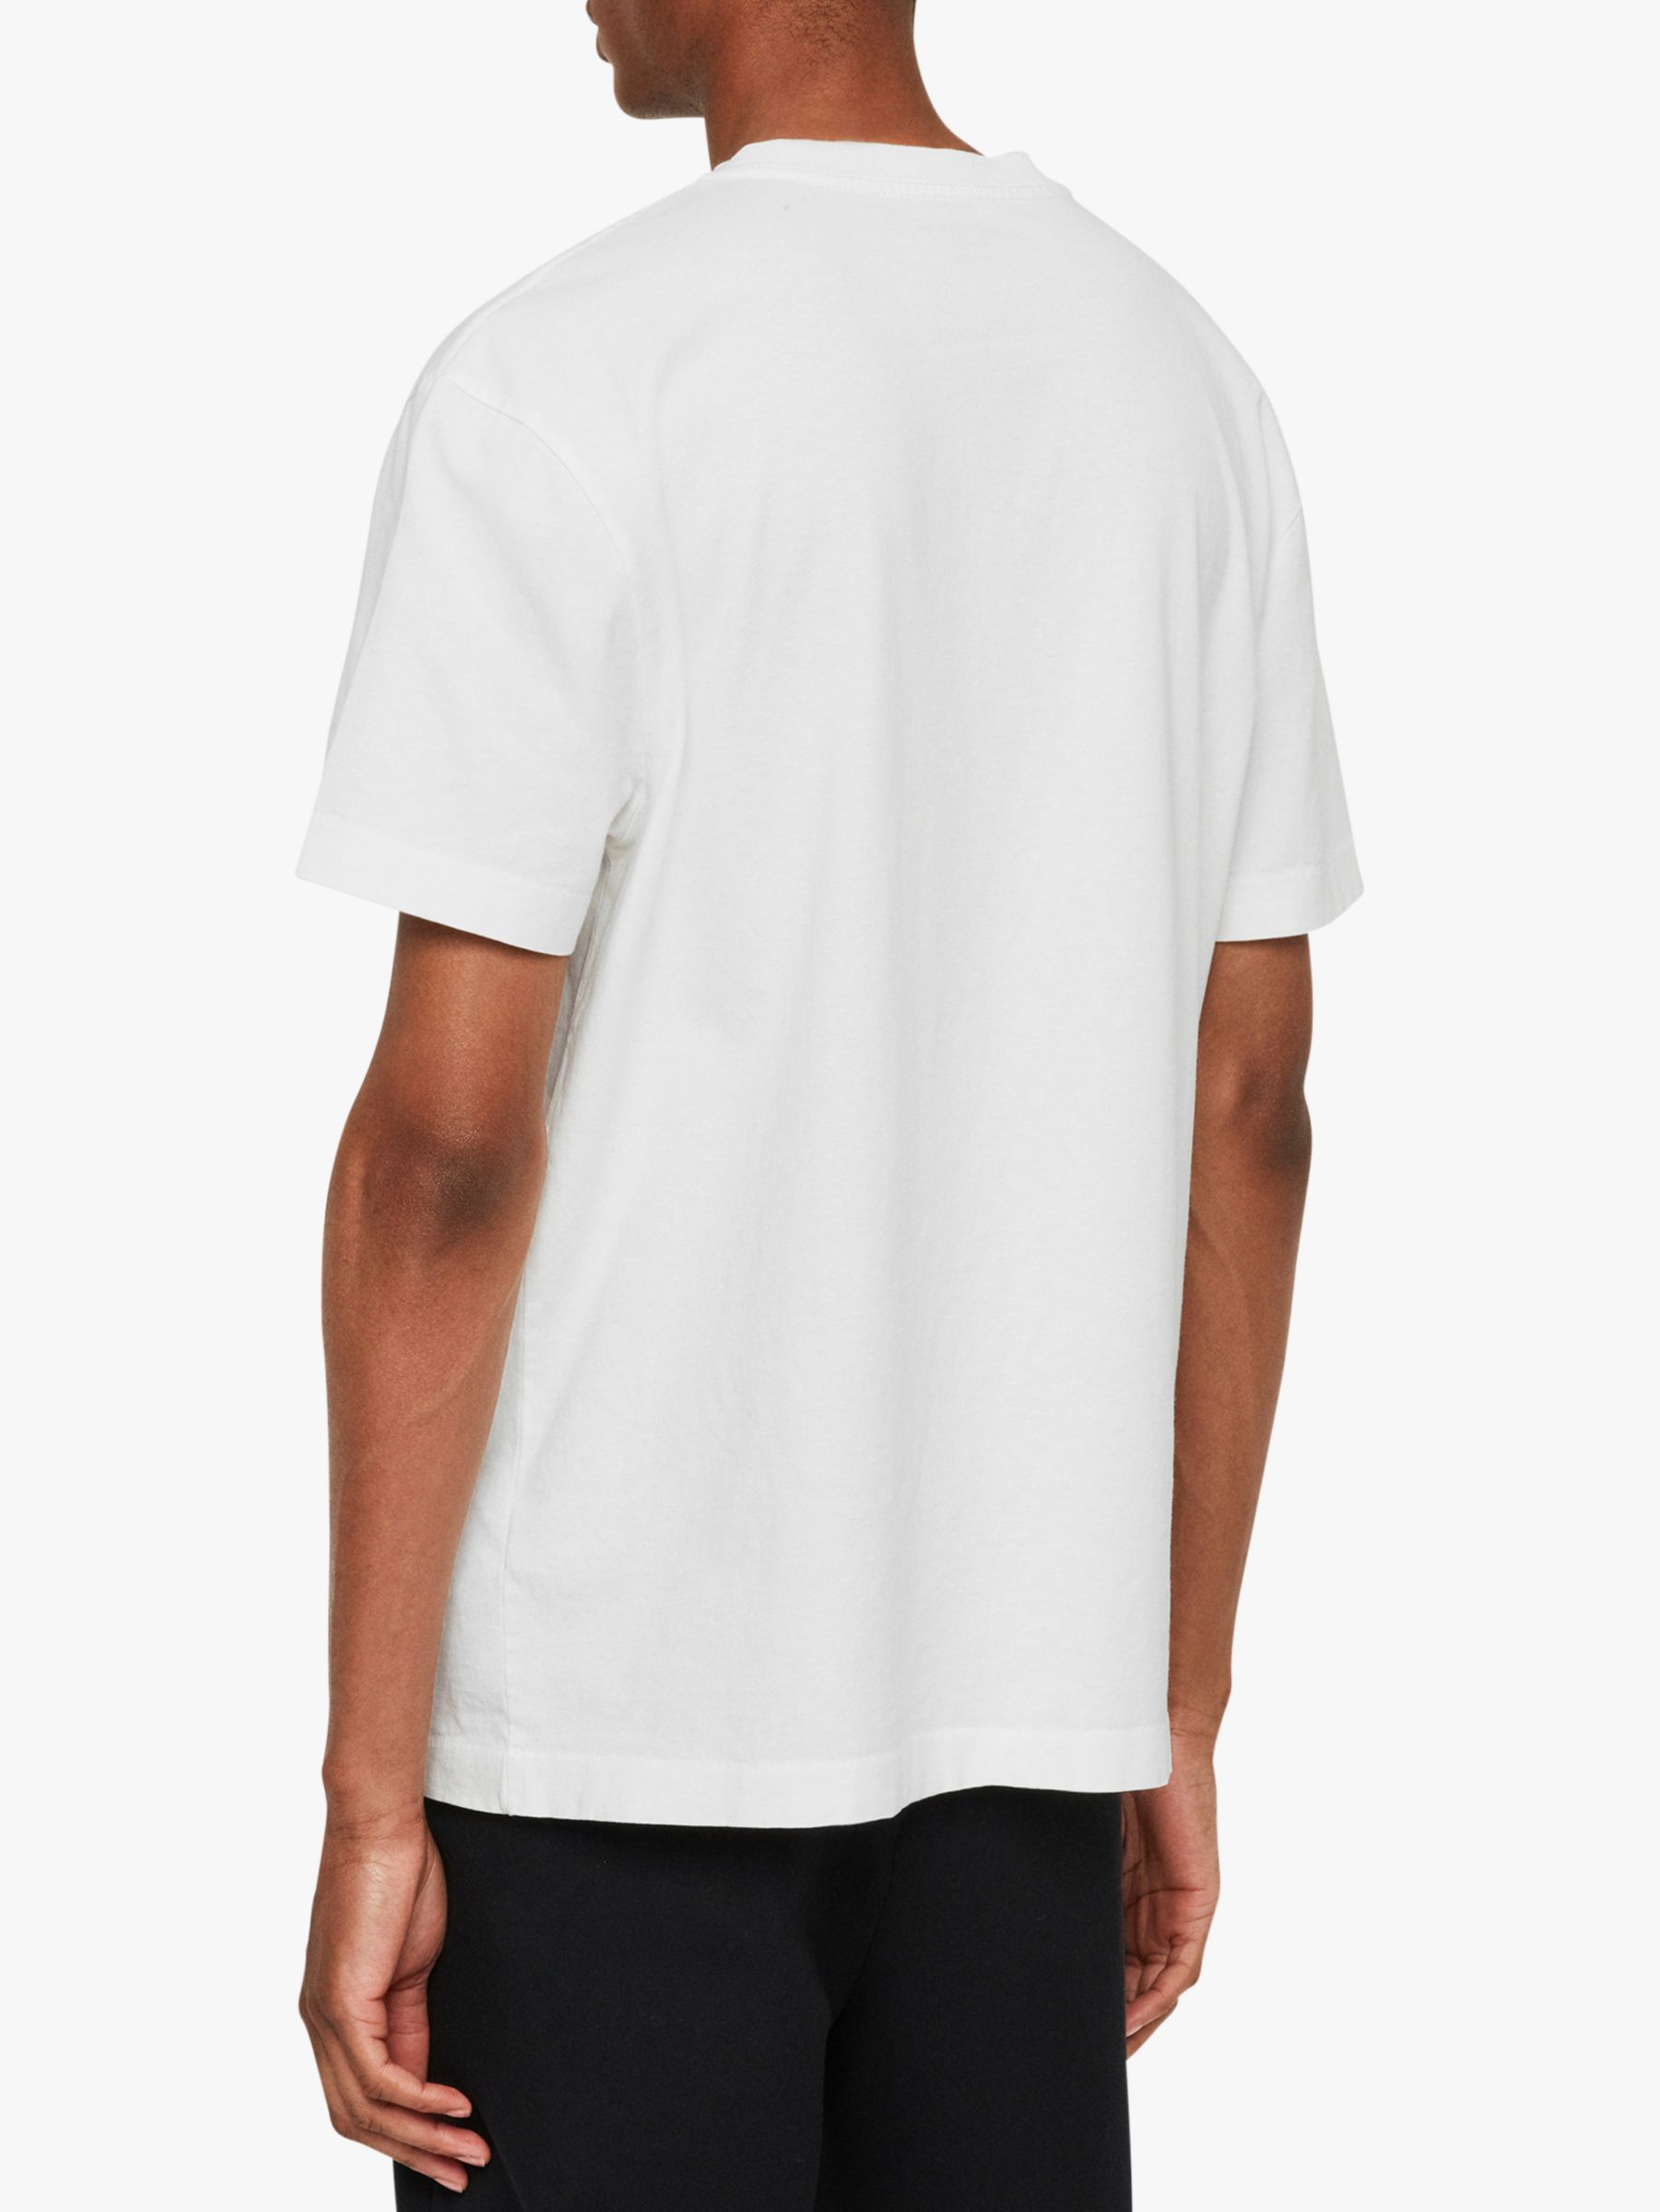 AllSaints Vival Crew T-Shirt, Chalk White